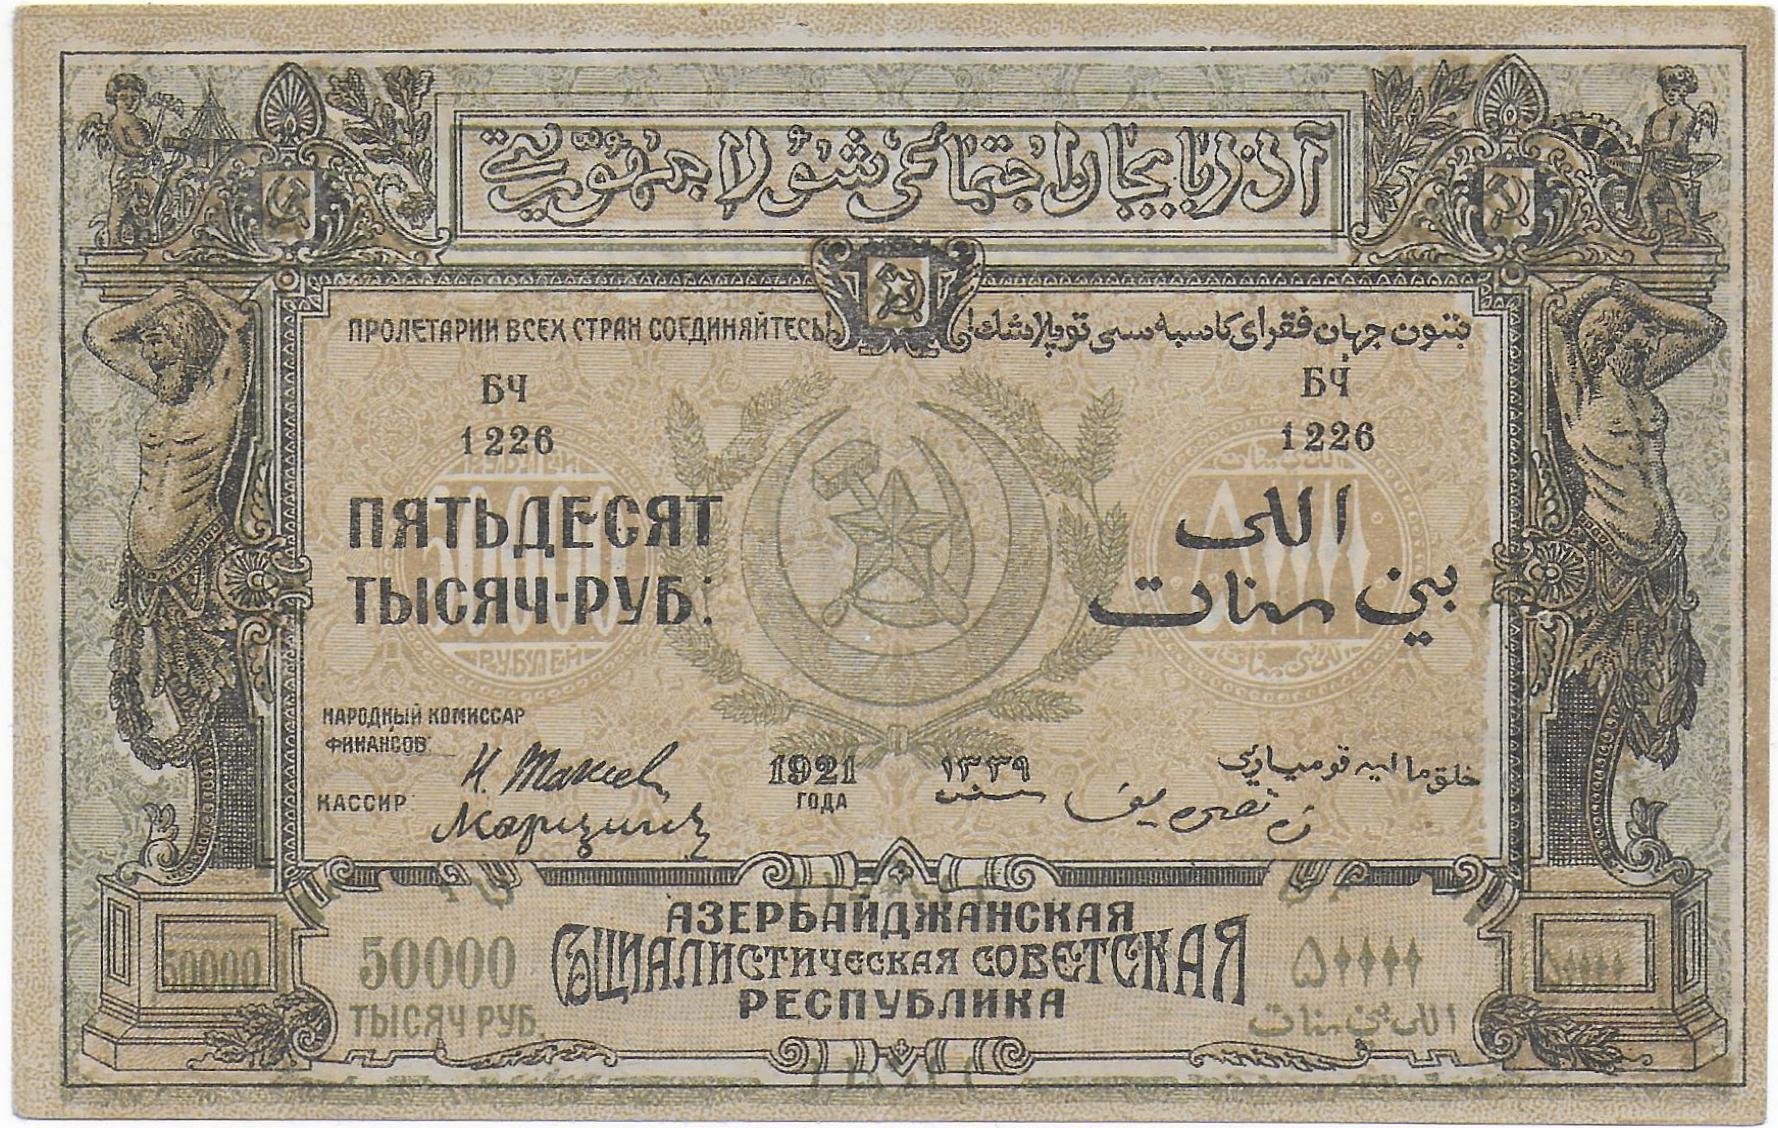 AZERBAIJAN  SSR   50,000 Rubles 1921   P.S716 front.jpg